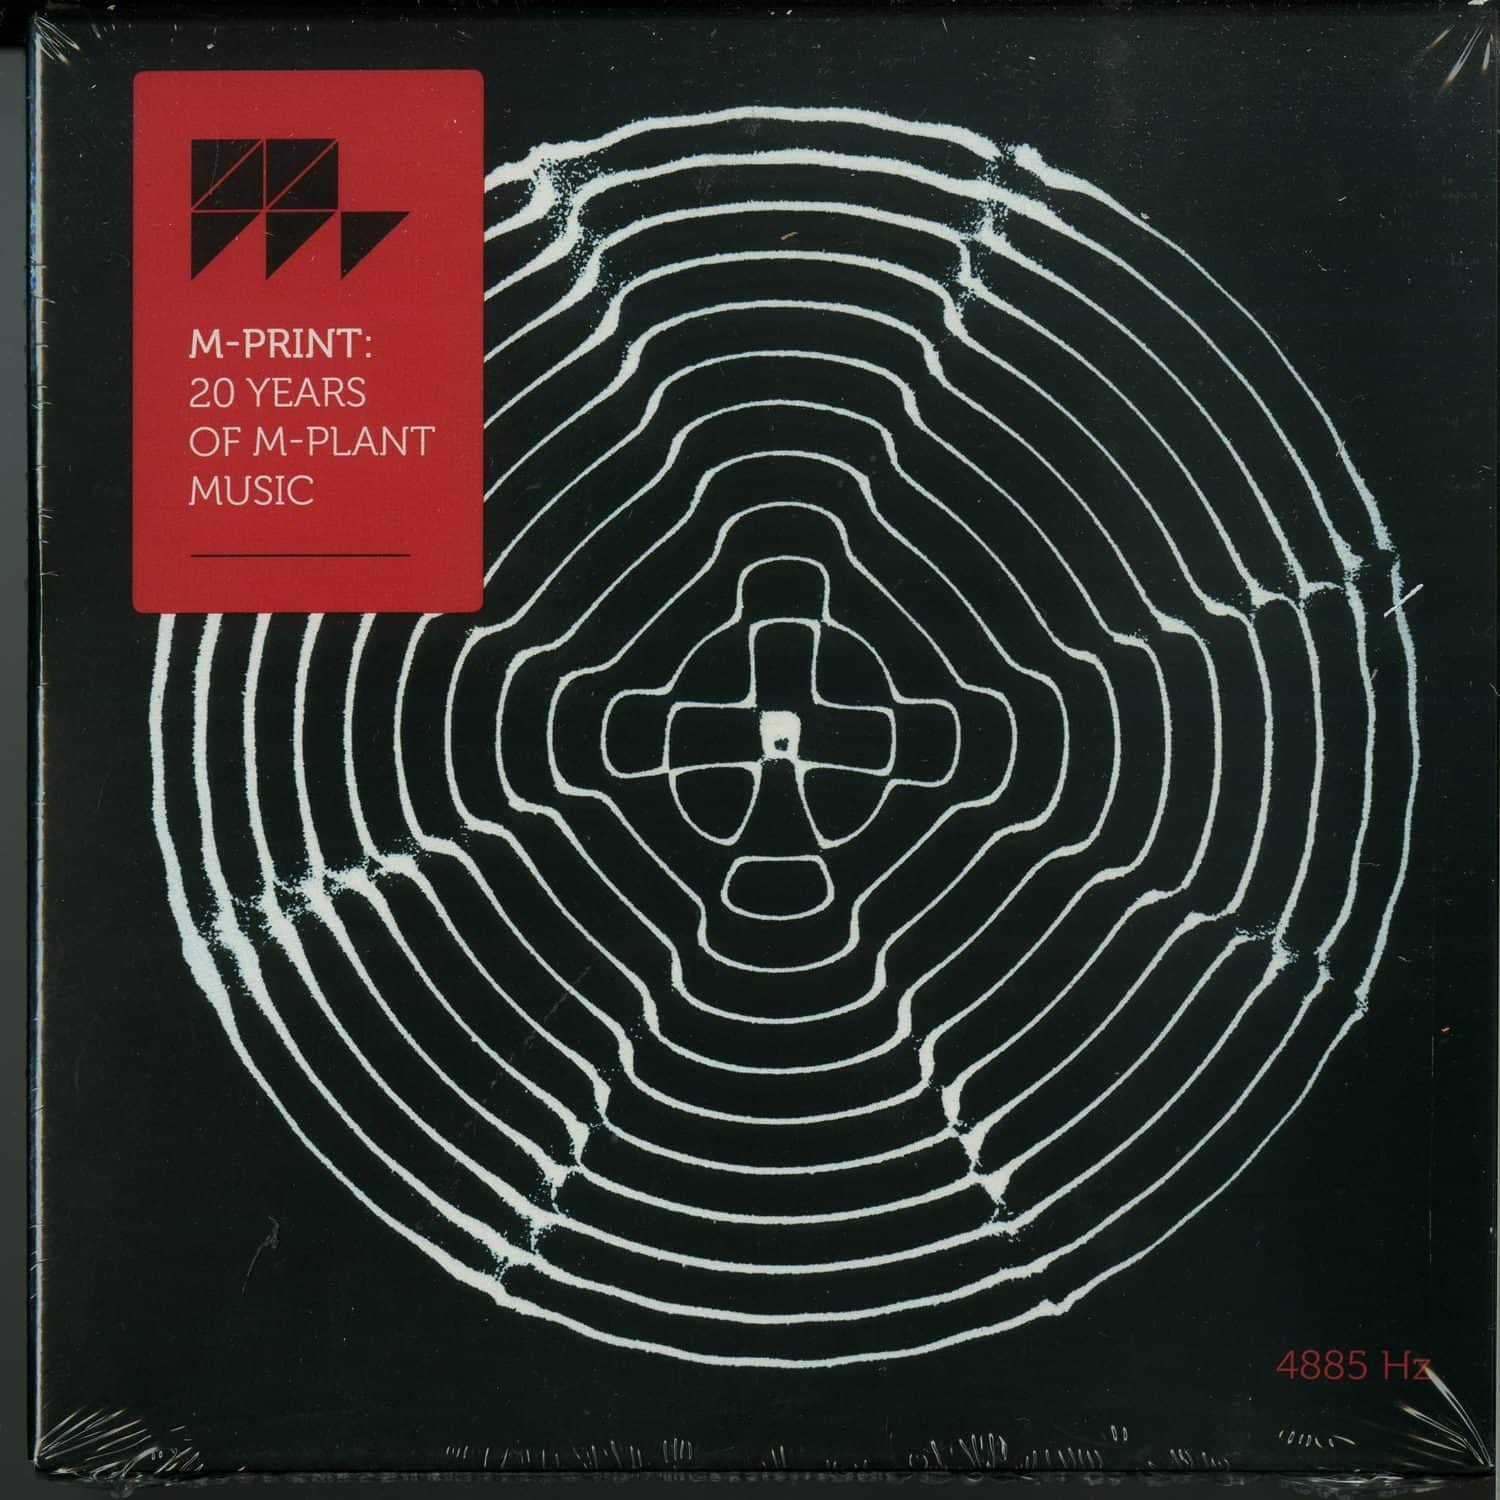 Robert Hood - M-PRINT: 20 YEARS OF M-PLANT MUSIC 